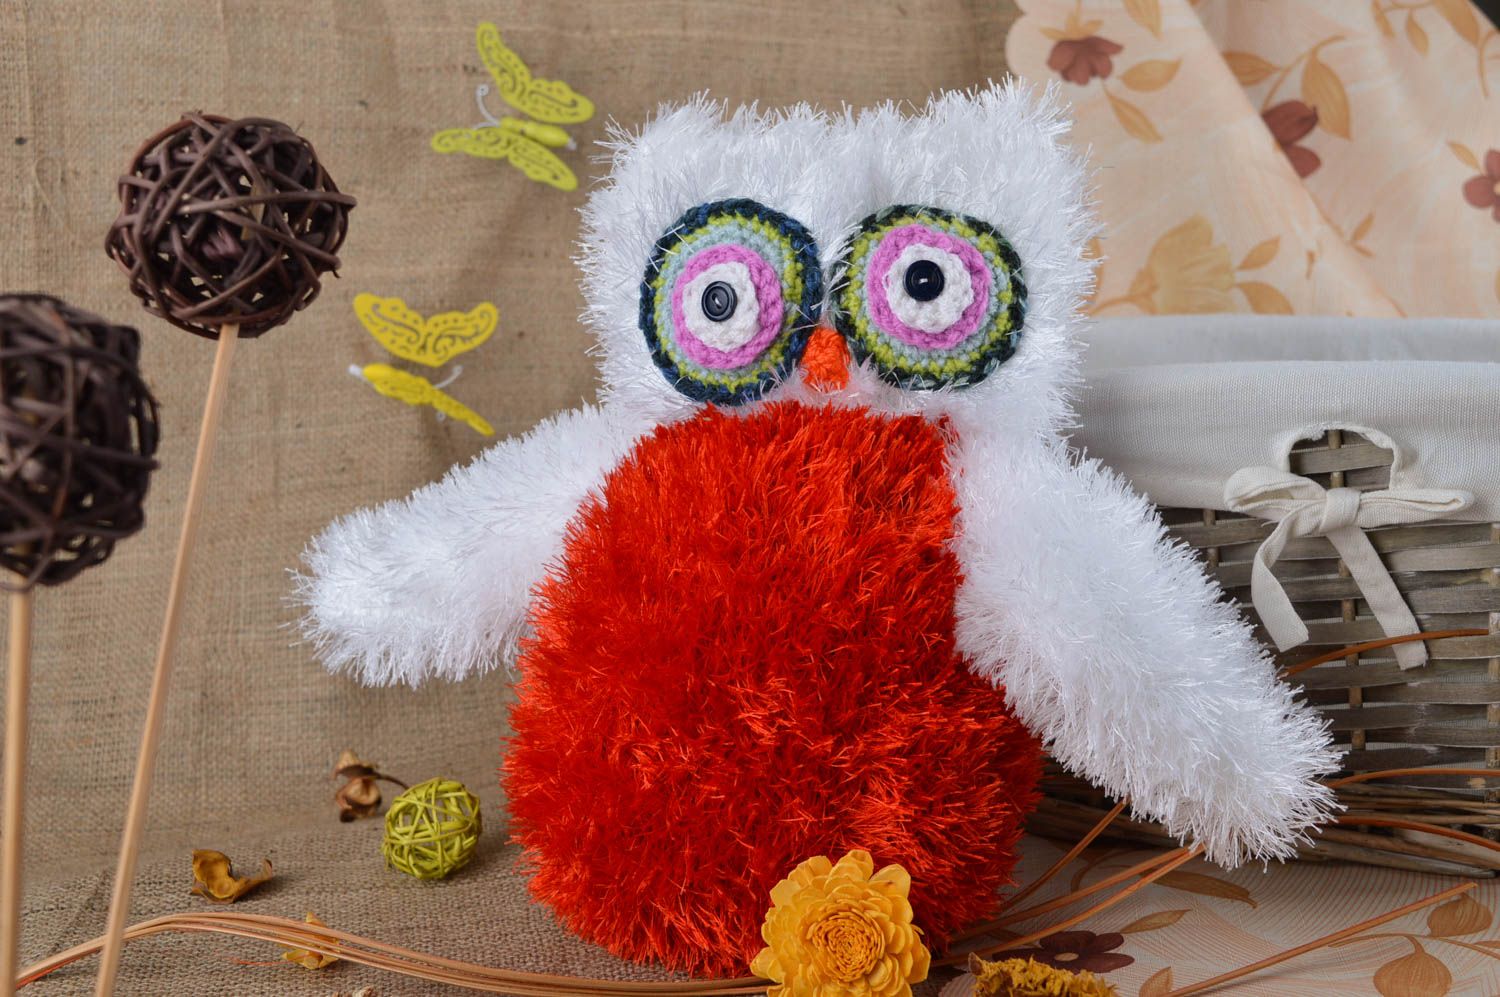 Handmade soft toy interior stuffed toy present for baby nursery decor ideas photo 1